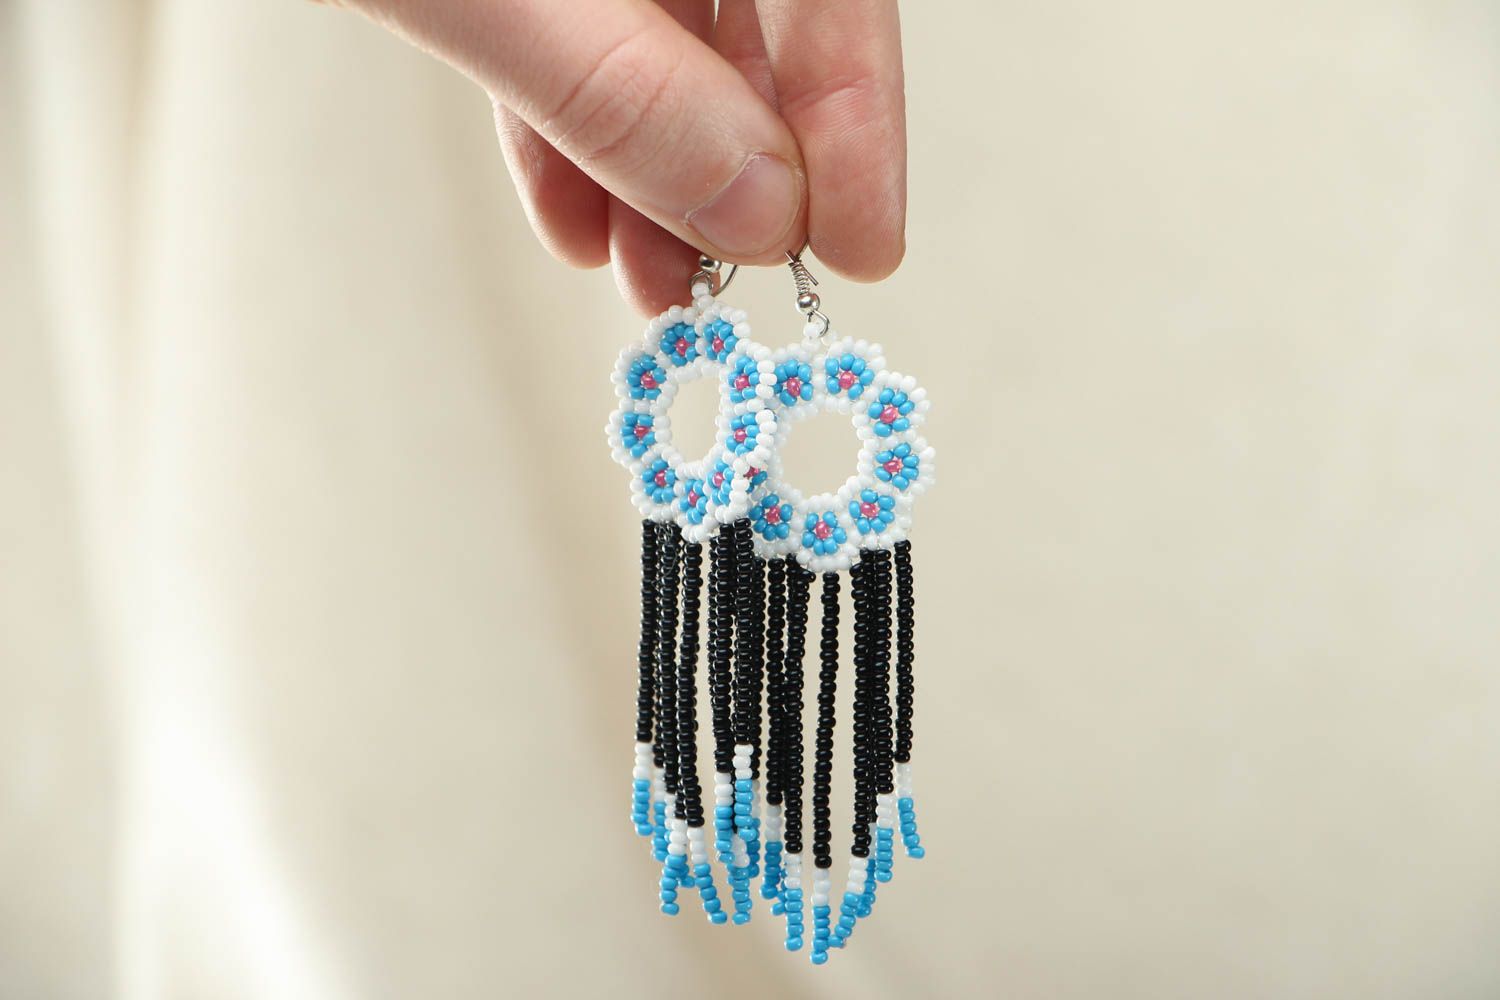 Homemade earrings with Czech beads photo 2